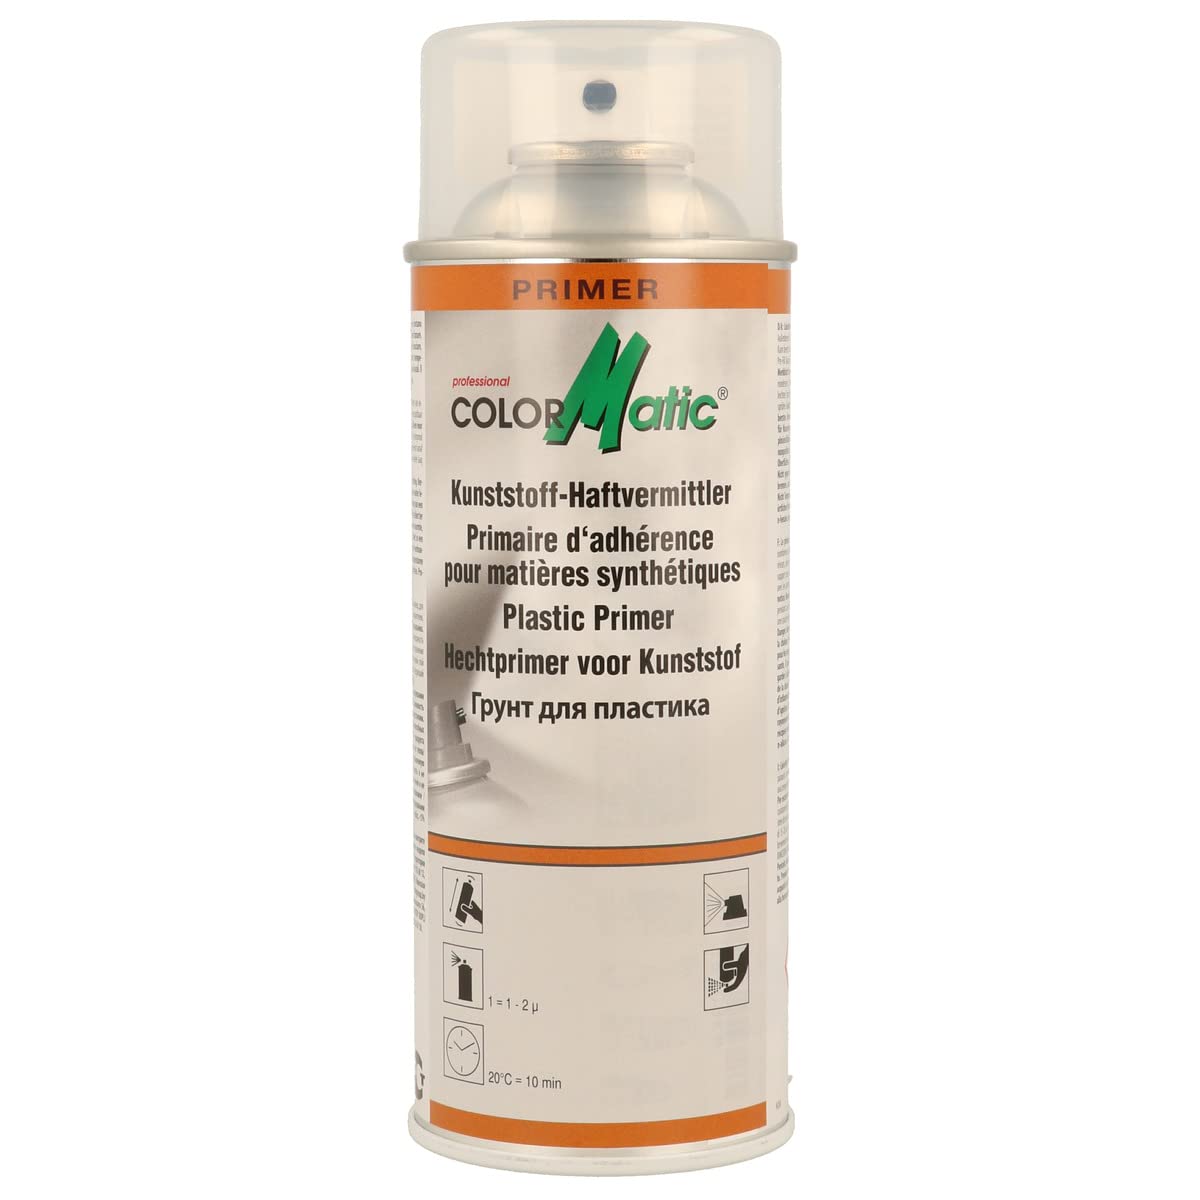 ColorMatic 856563 Kunststoff-Haftvermittler transparent 400 ml von COLORMATIC